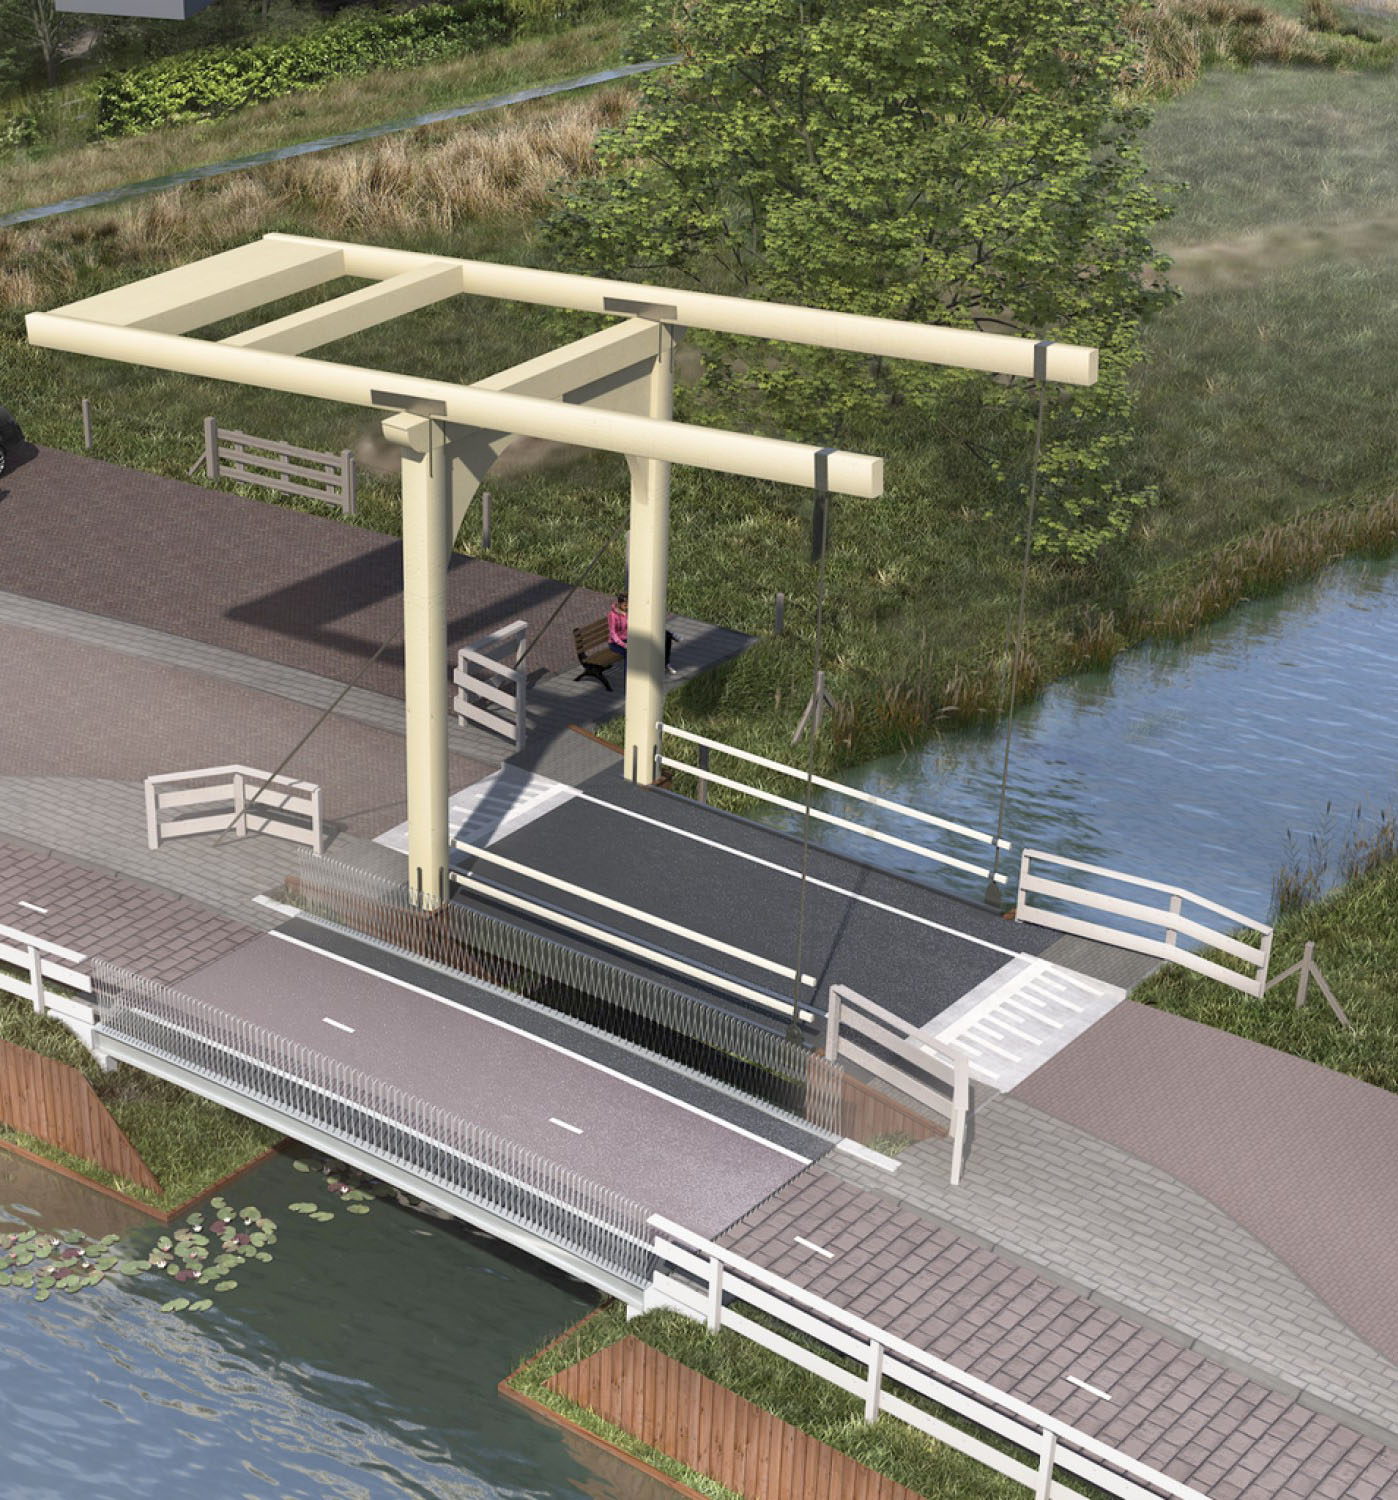 Fietsbrug t.b.v. project de Gele brug te Ankeveen